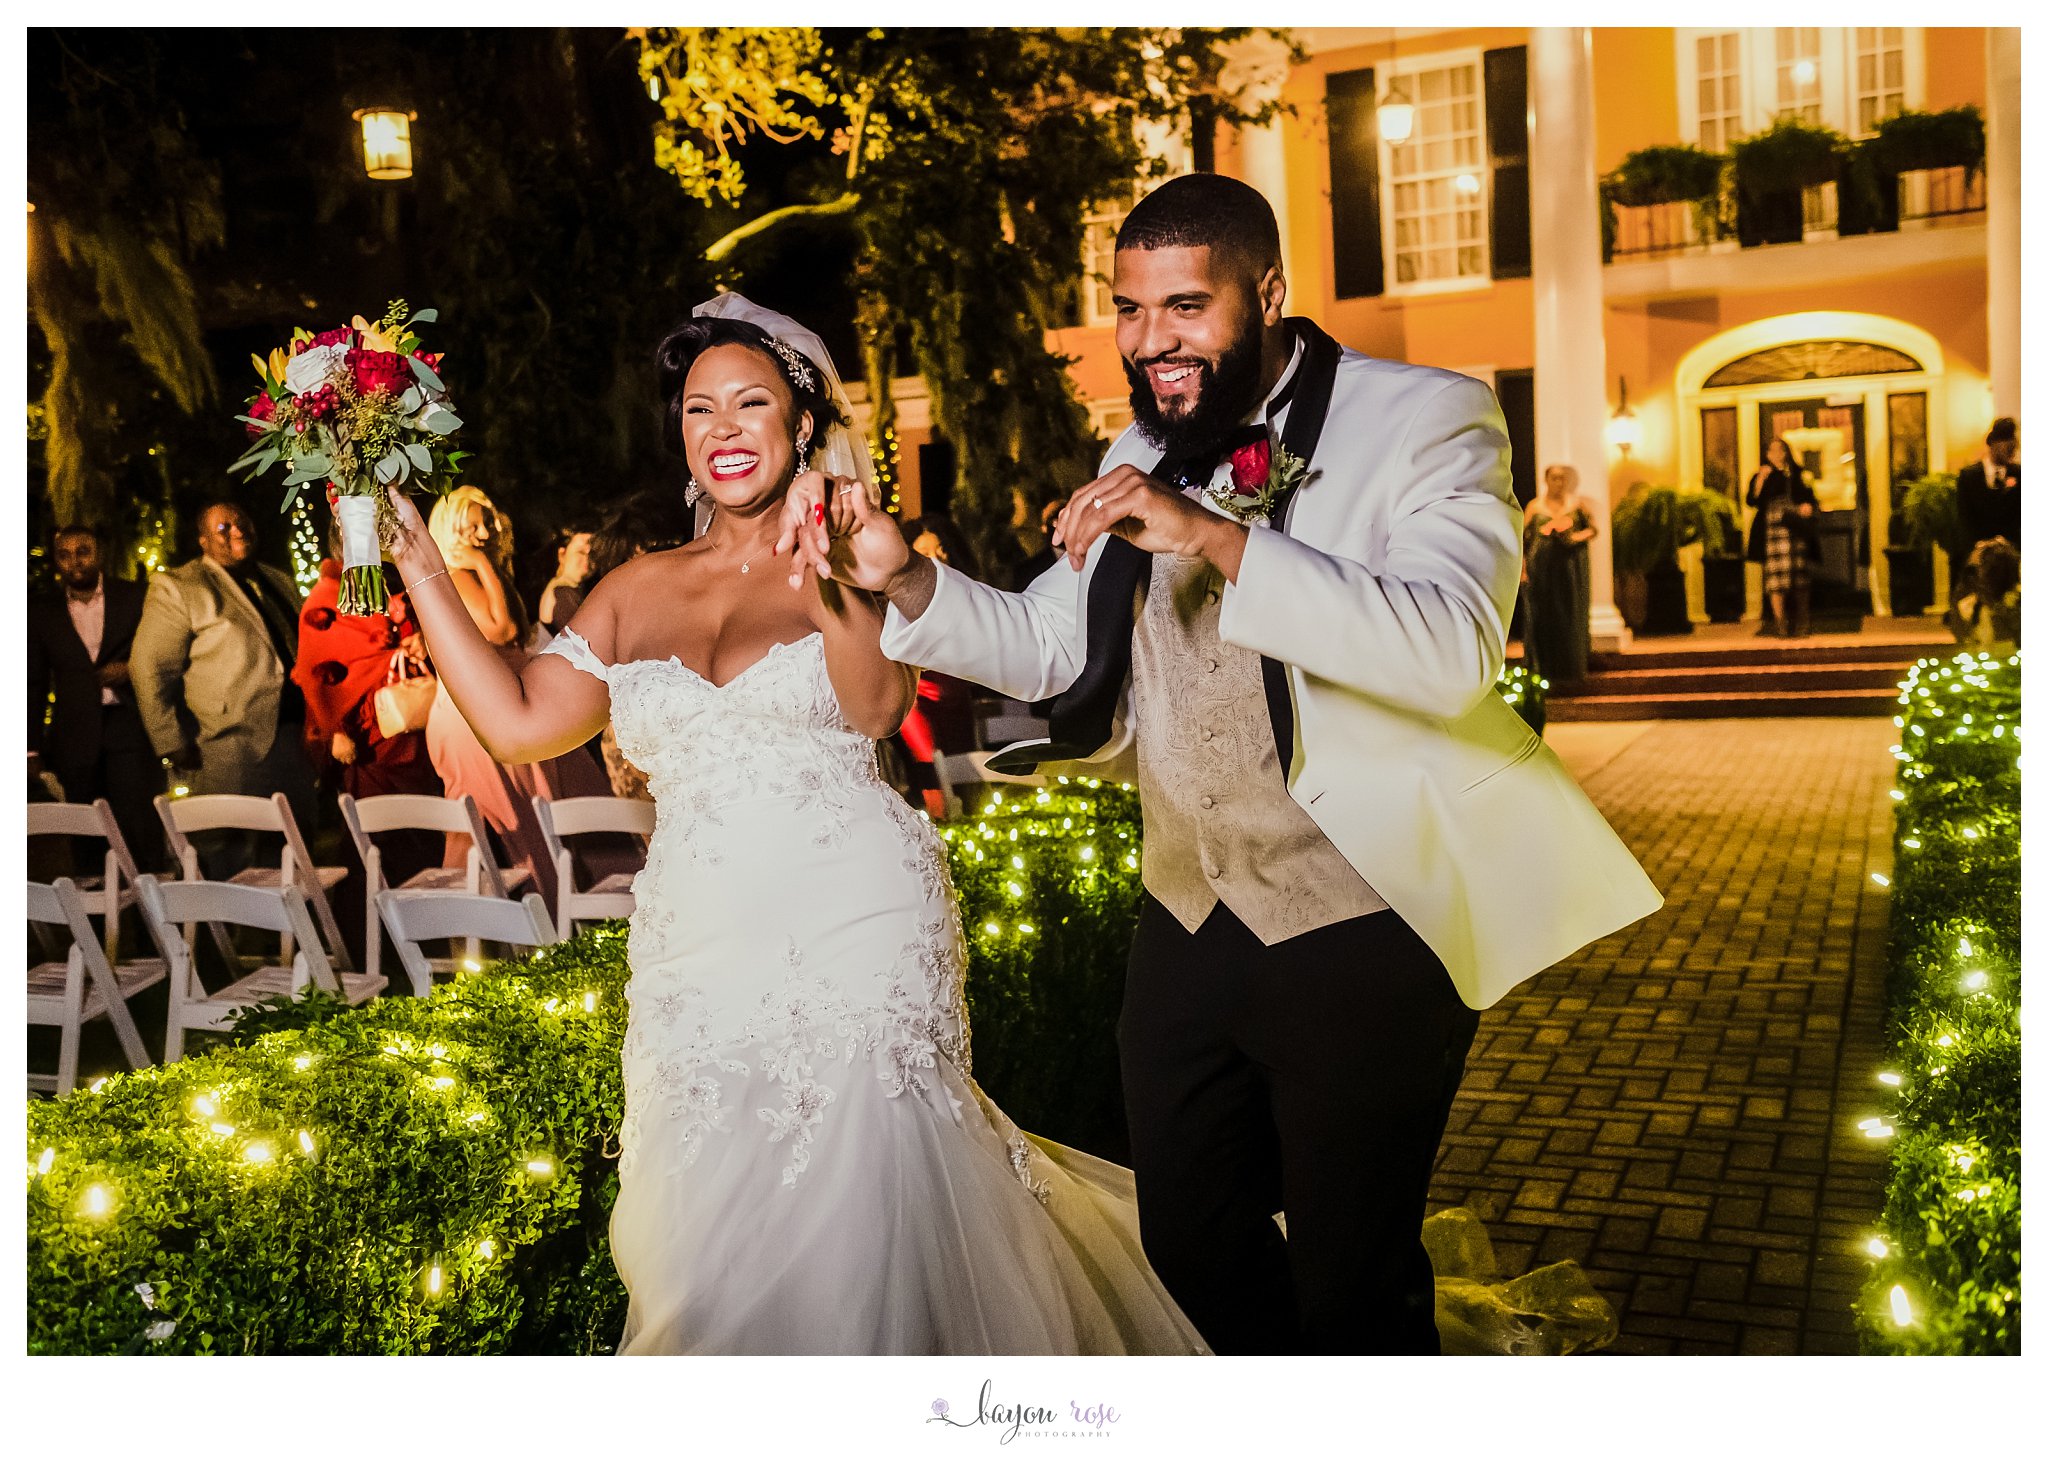 joyful wedding ceremony at Southern Oaks New Orleans